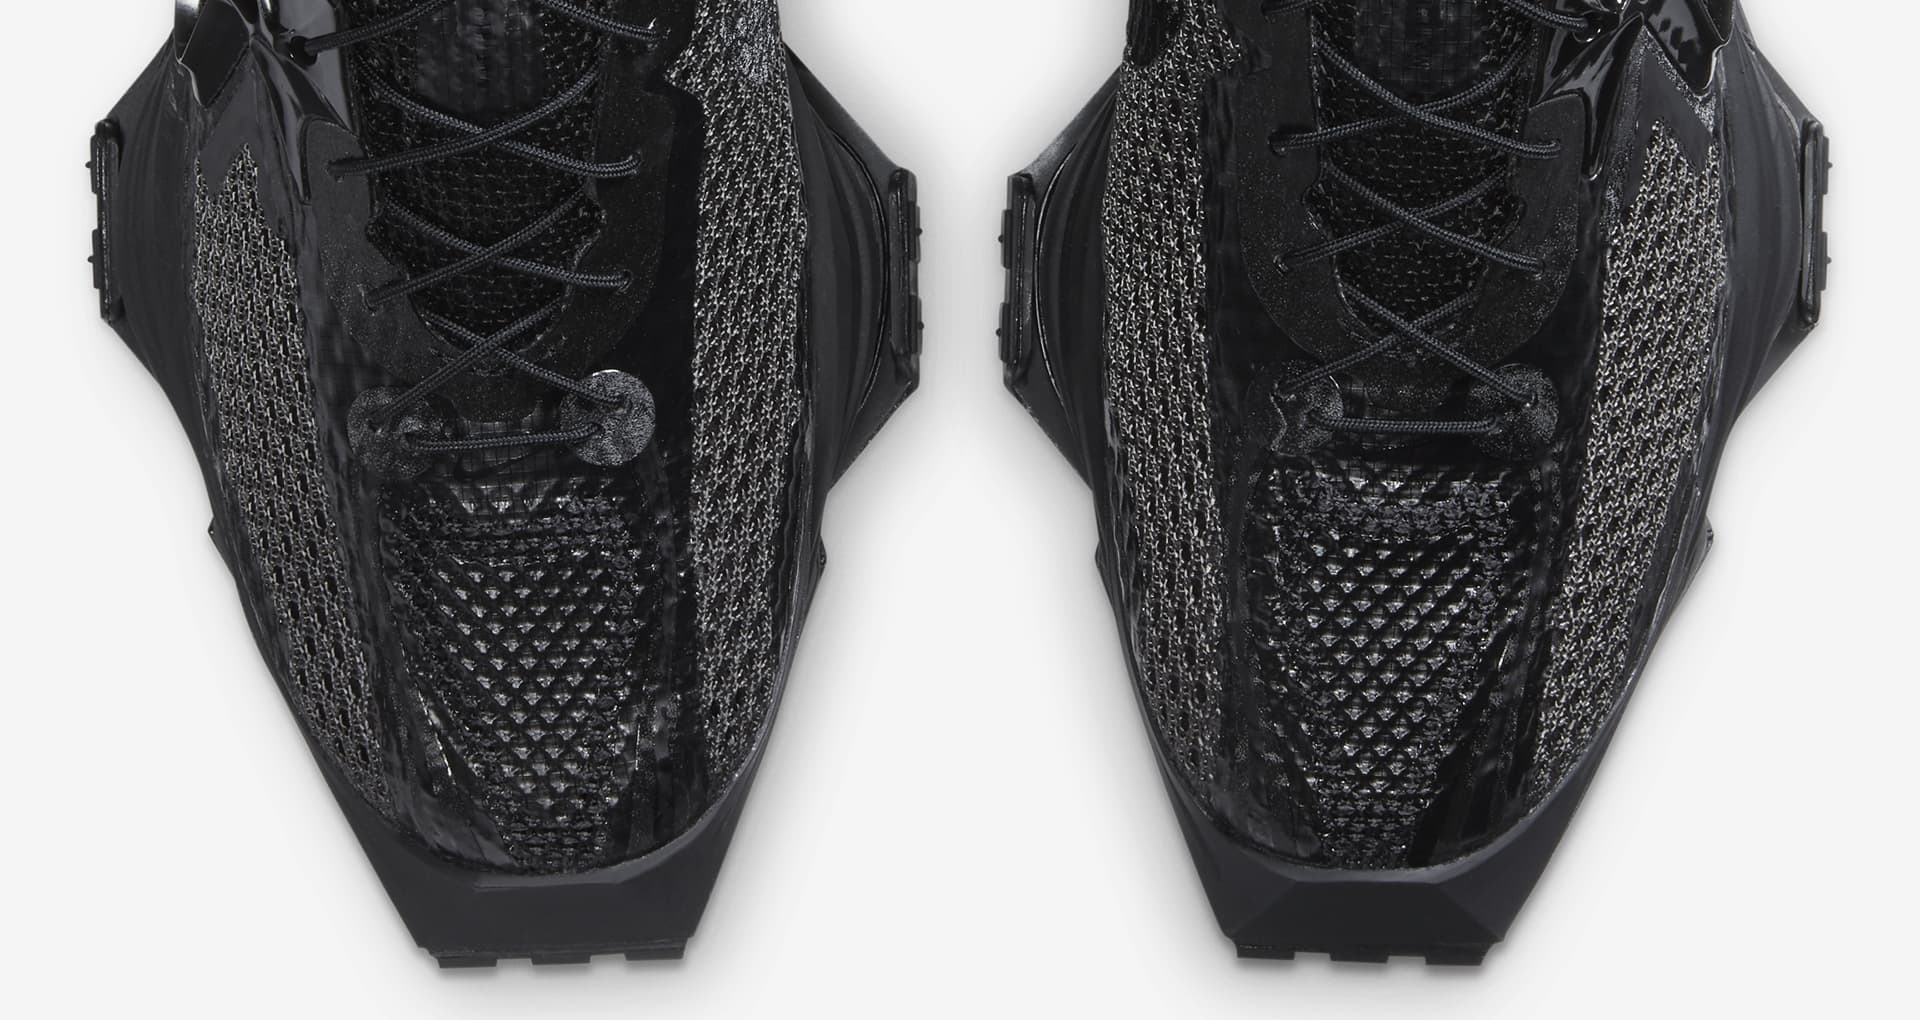 Zoom 004 x MMW 'Black' Release Date. Nike SNKRS CZ